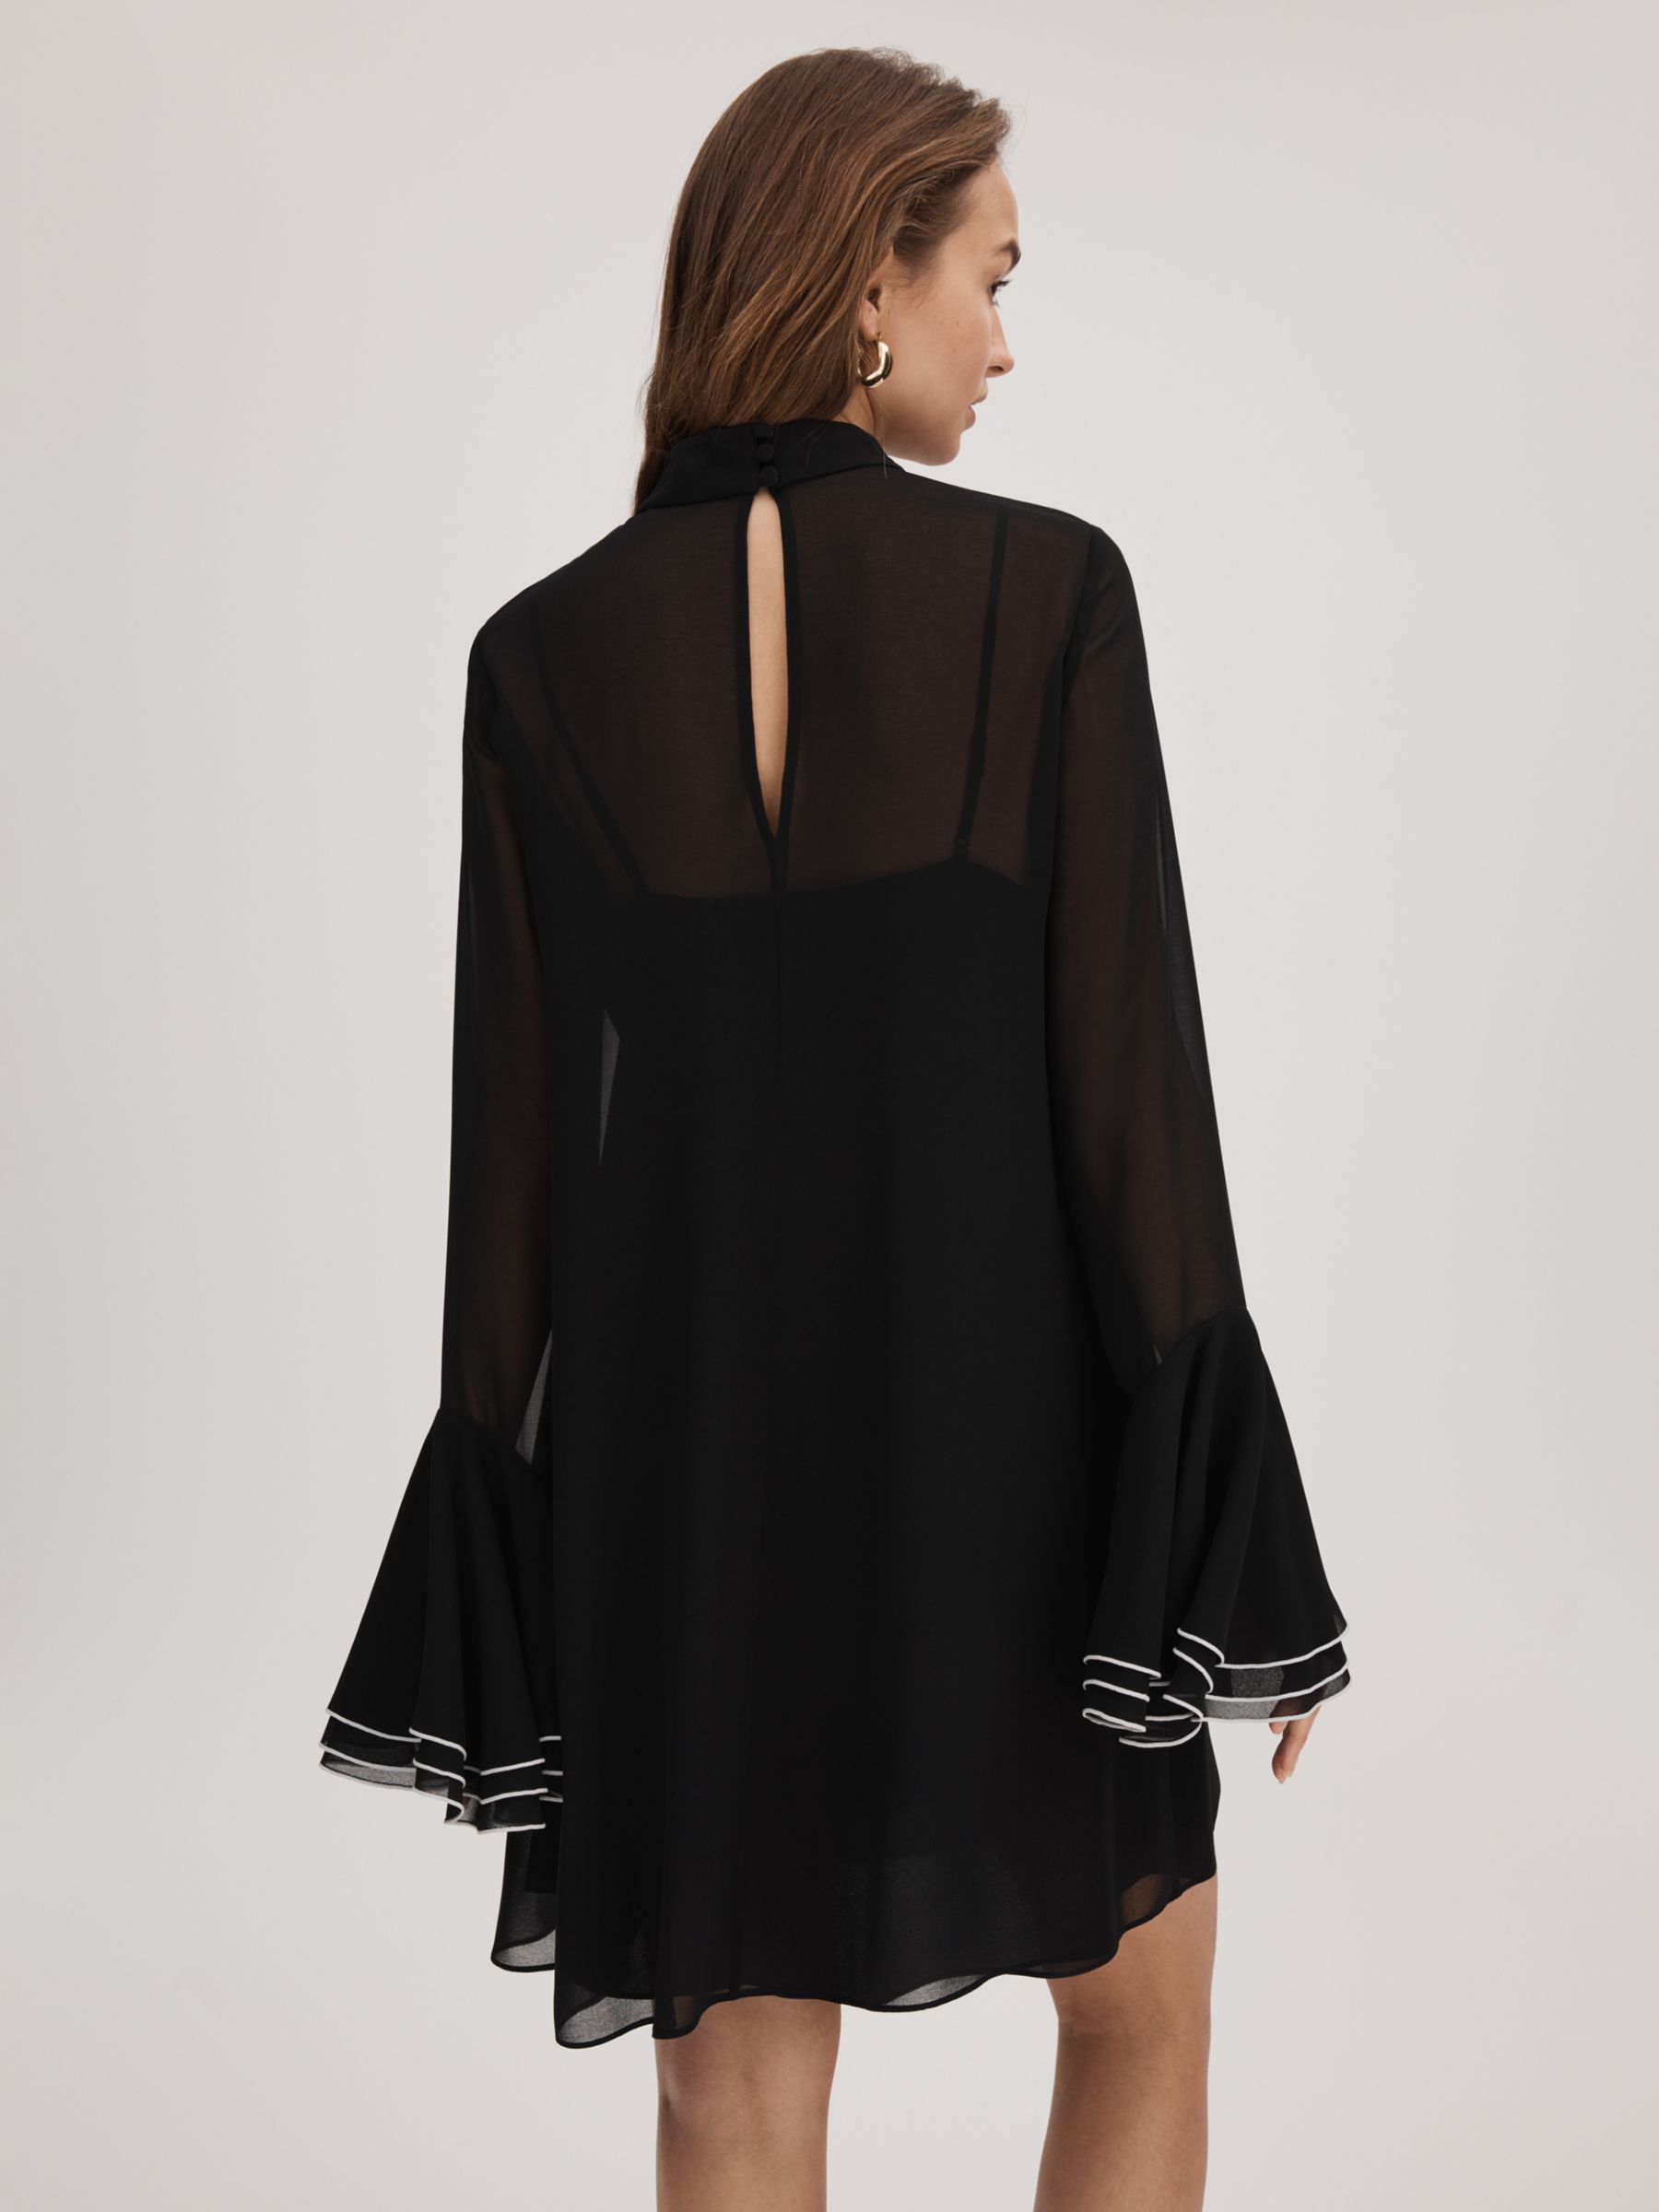 FLORERE Sheer Fluted Cuff Mini Dress, Black at John Lewis & Partners